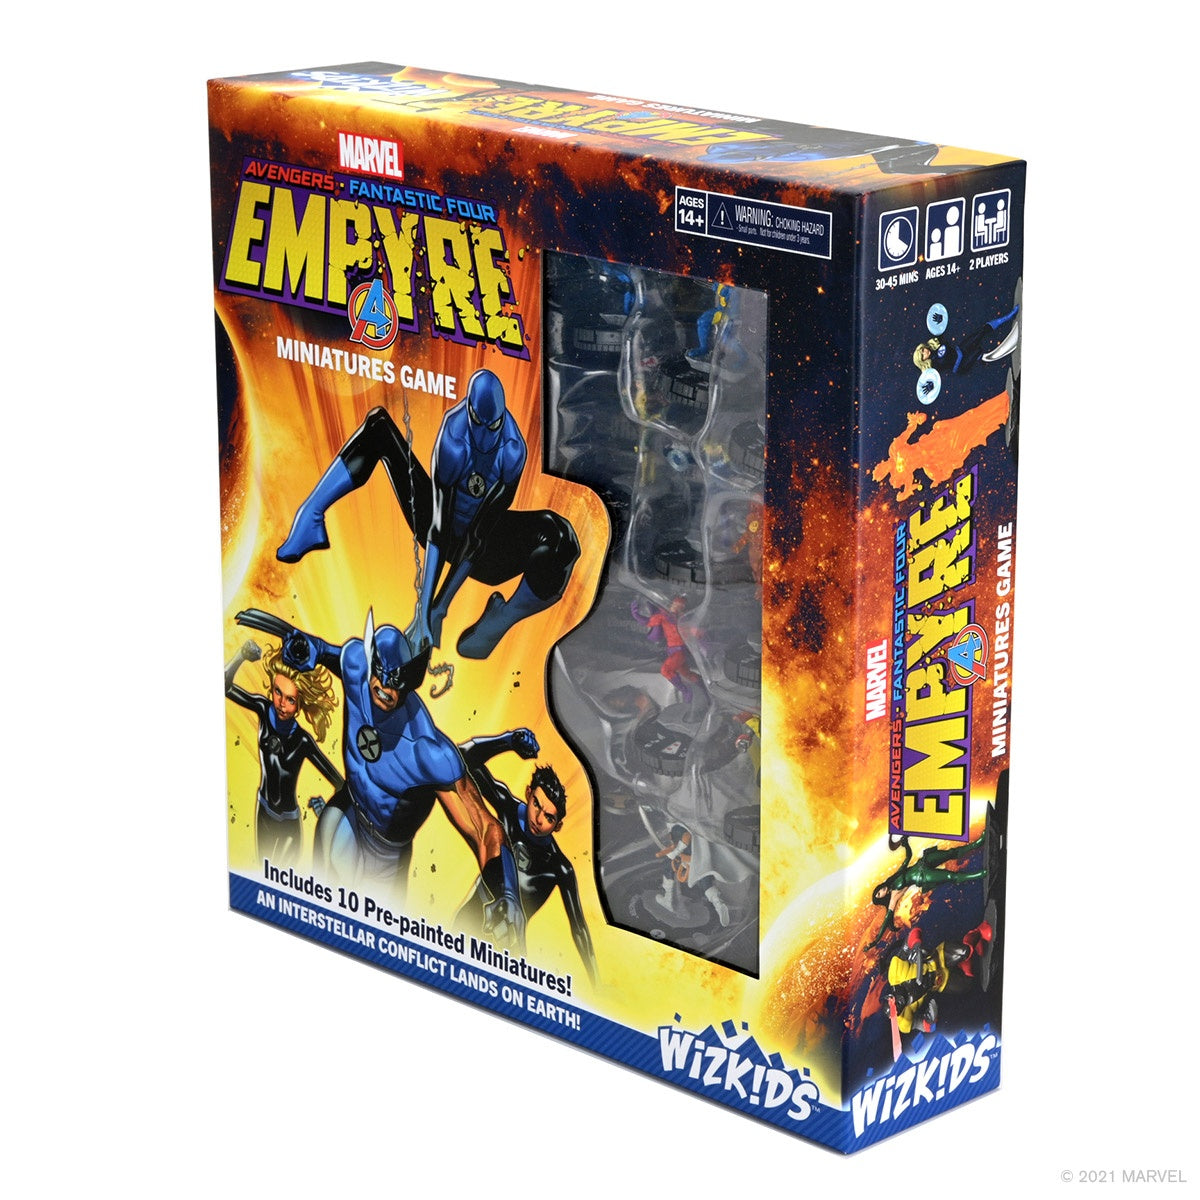 HeroClix - Miniatures Game - Avengers Fantastic Four Empyre